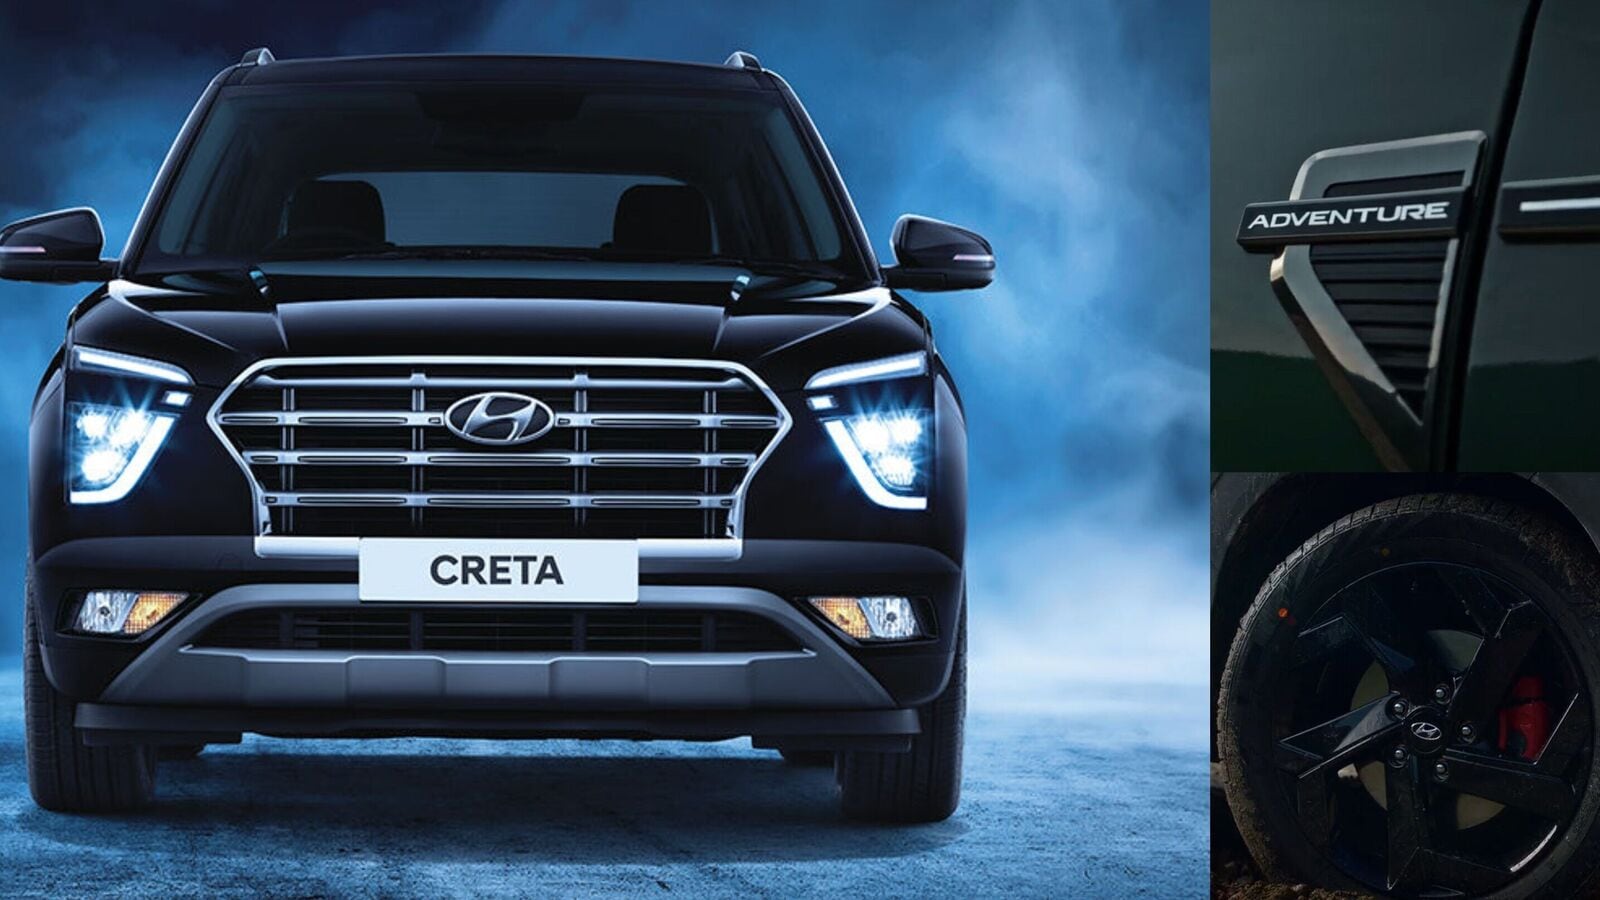 Hyundai introduces the Creta Adventure Edition